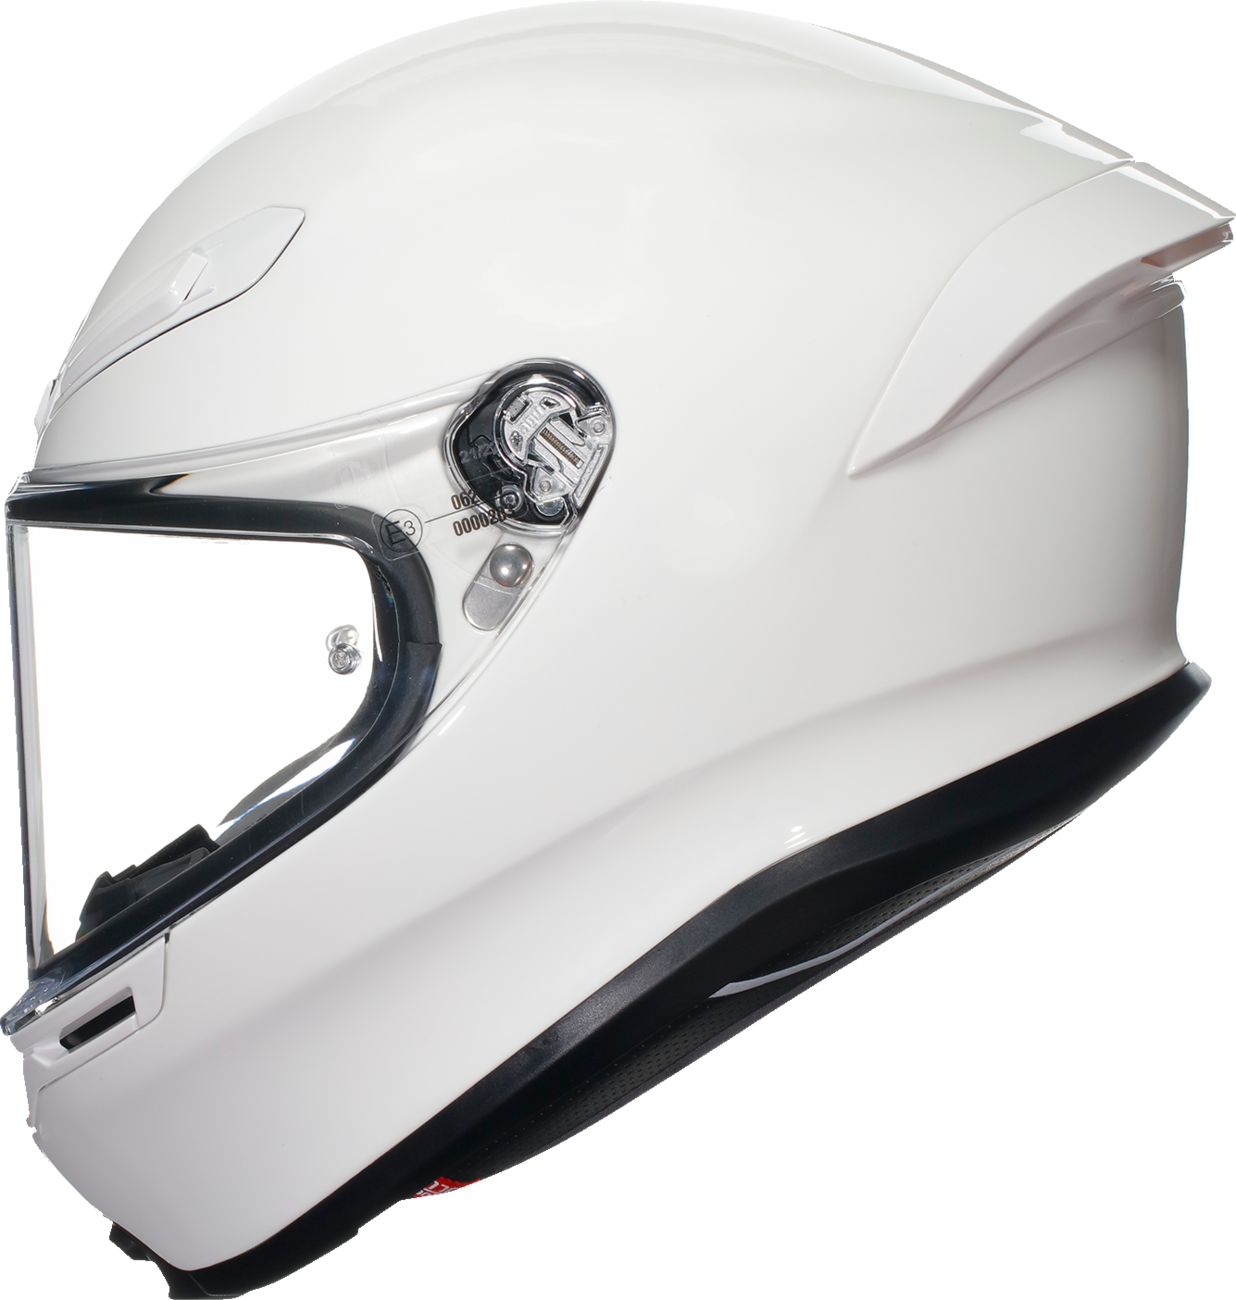 AGV K6 S Helmet - White - XL 2118395002010XL